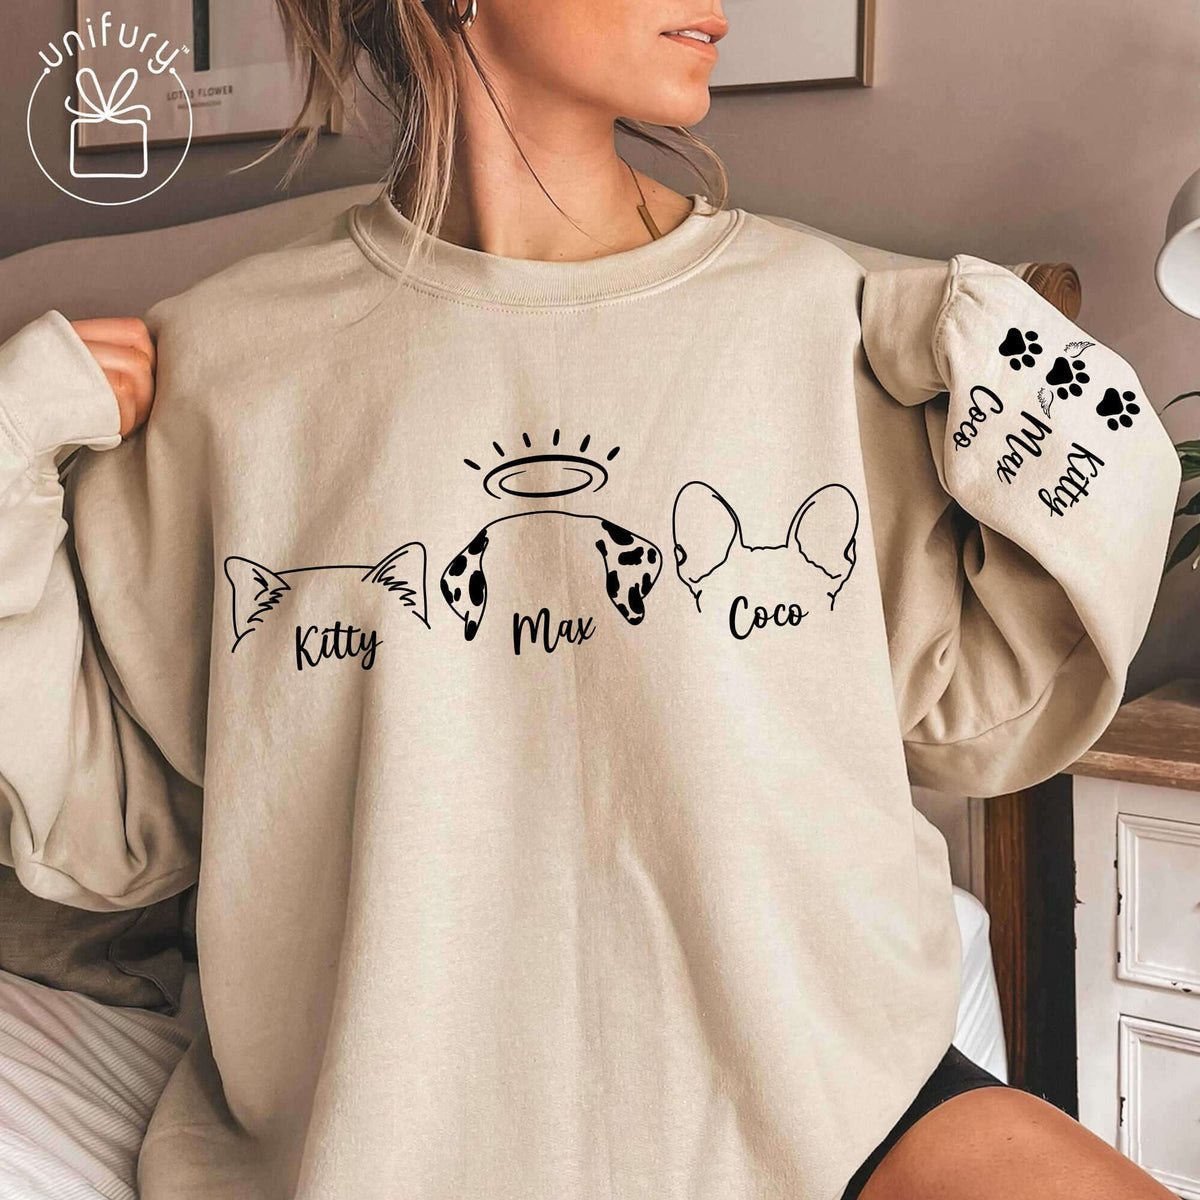 Dog Cat Ears Sleeve Printed Standard Sweatshirt For Dog Cat Lovers